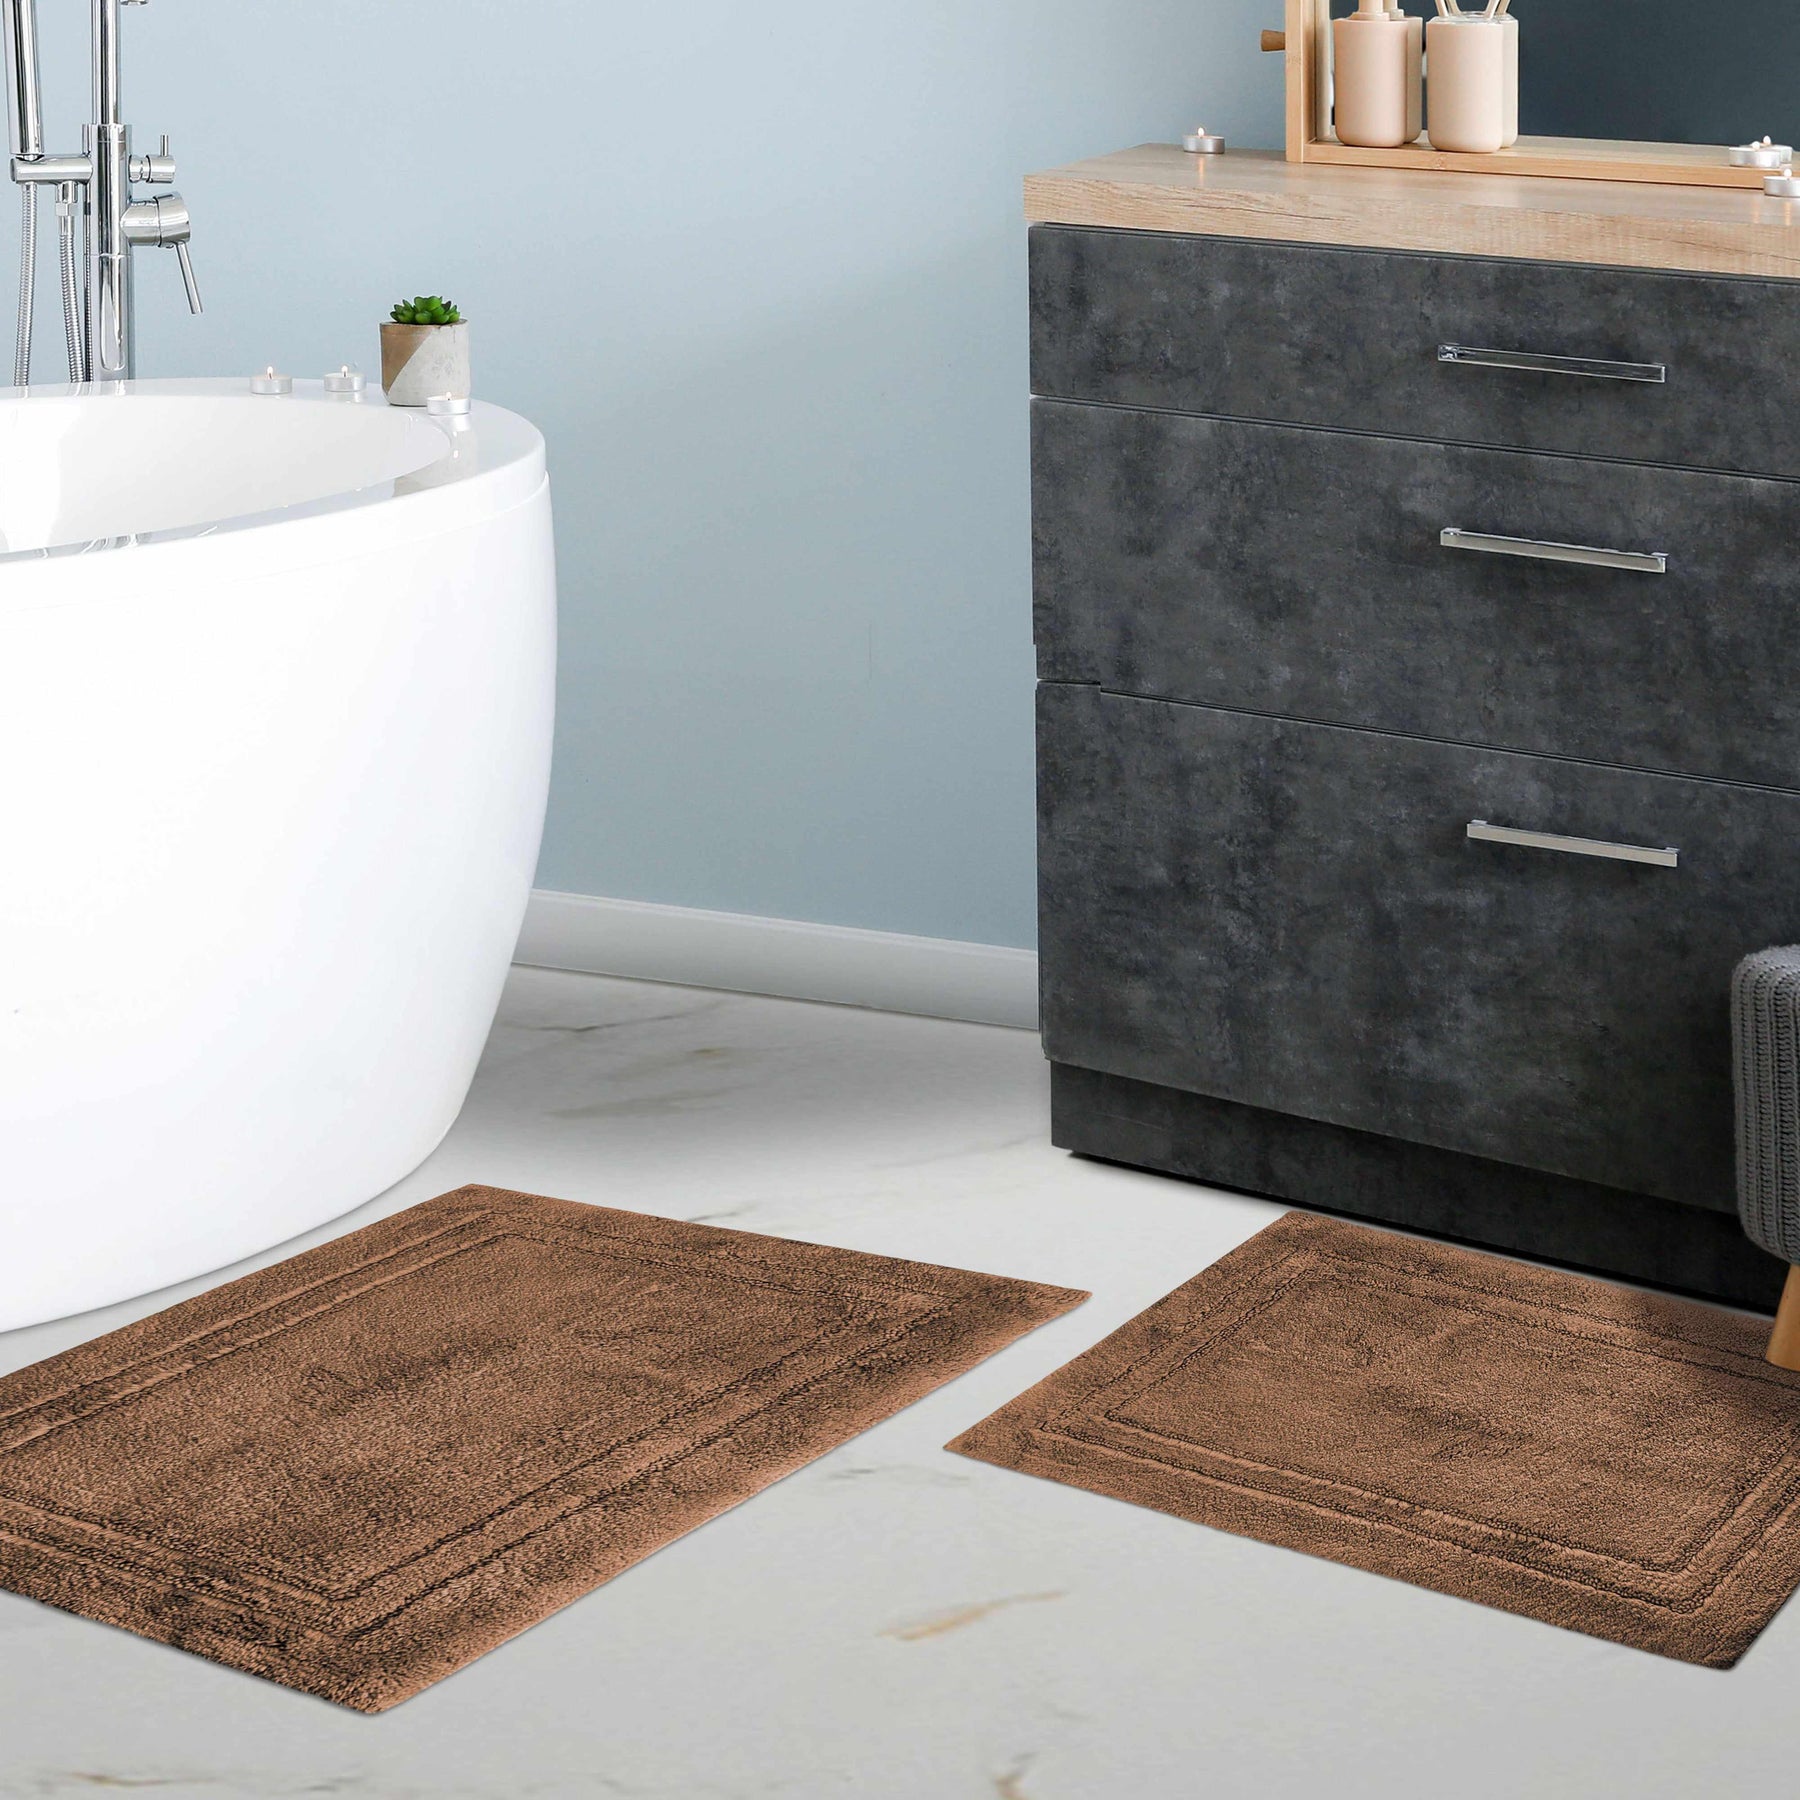 2 Pieces Modern Non-Slip Soft Bath Mat Set Abstract Bathroom Rugs